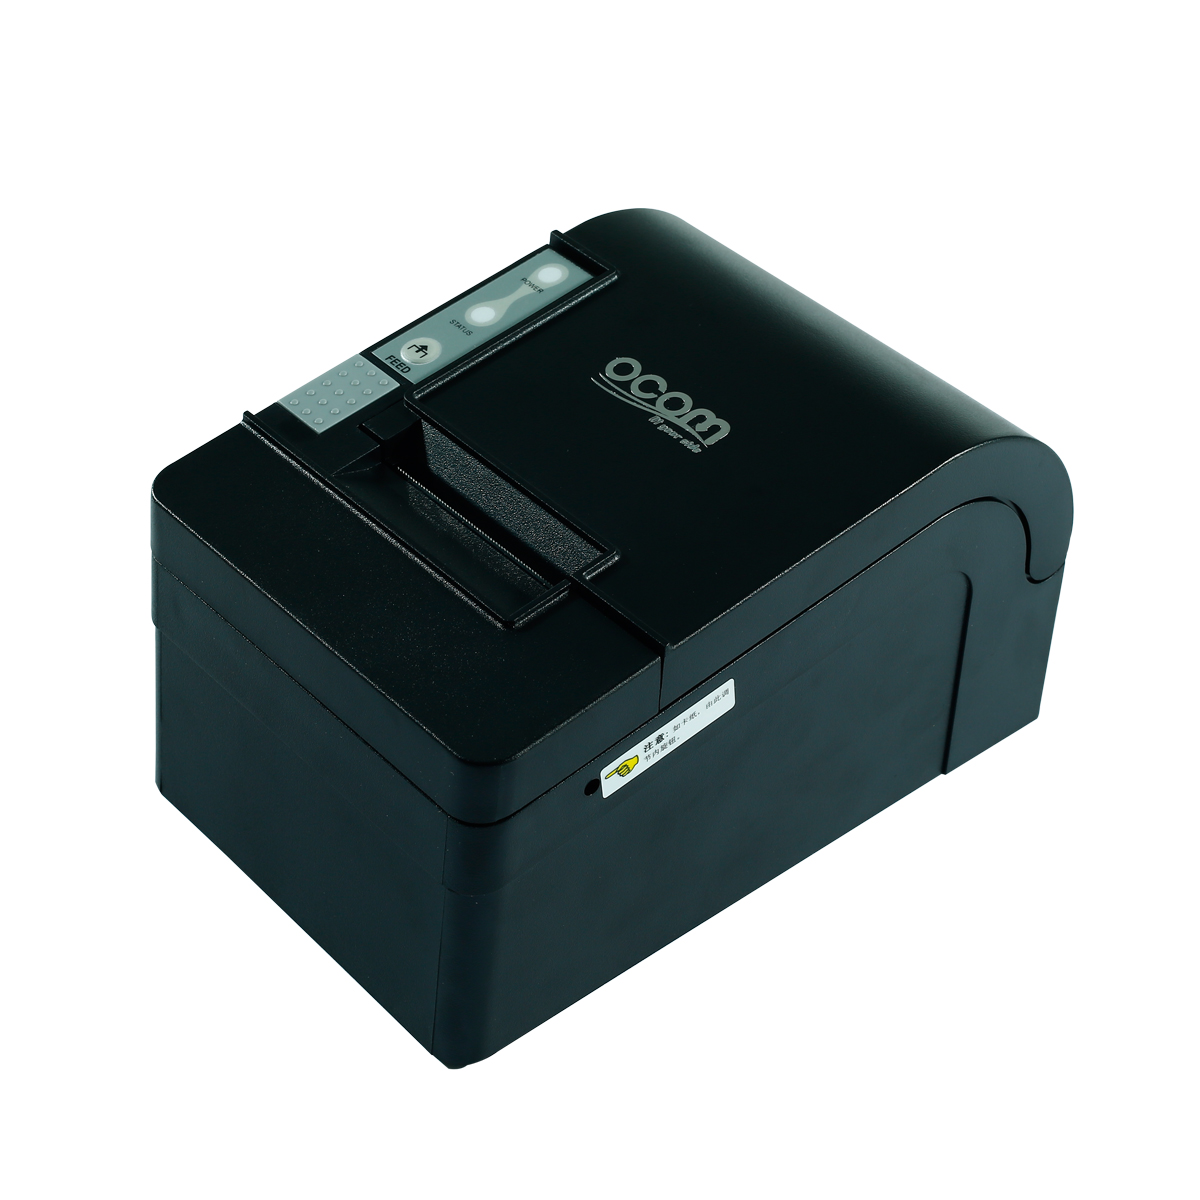 2 inch Auto-cutter Pos Receipt Printer (OCPP-58C)